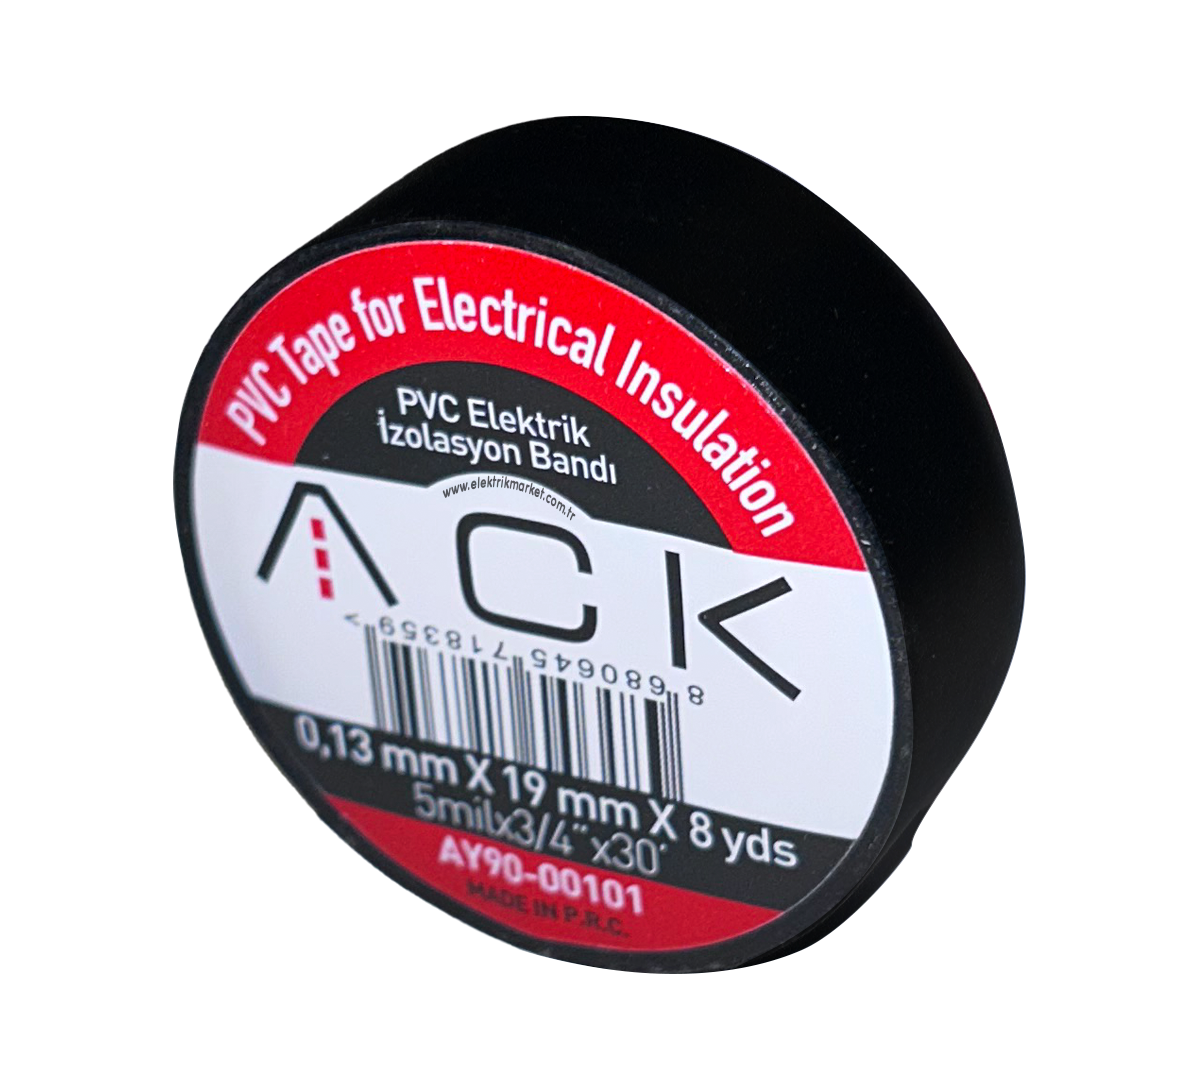 ACK  izole bant PVC Elektrik Bandı AY90-00101